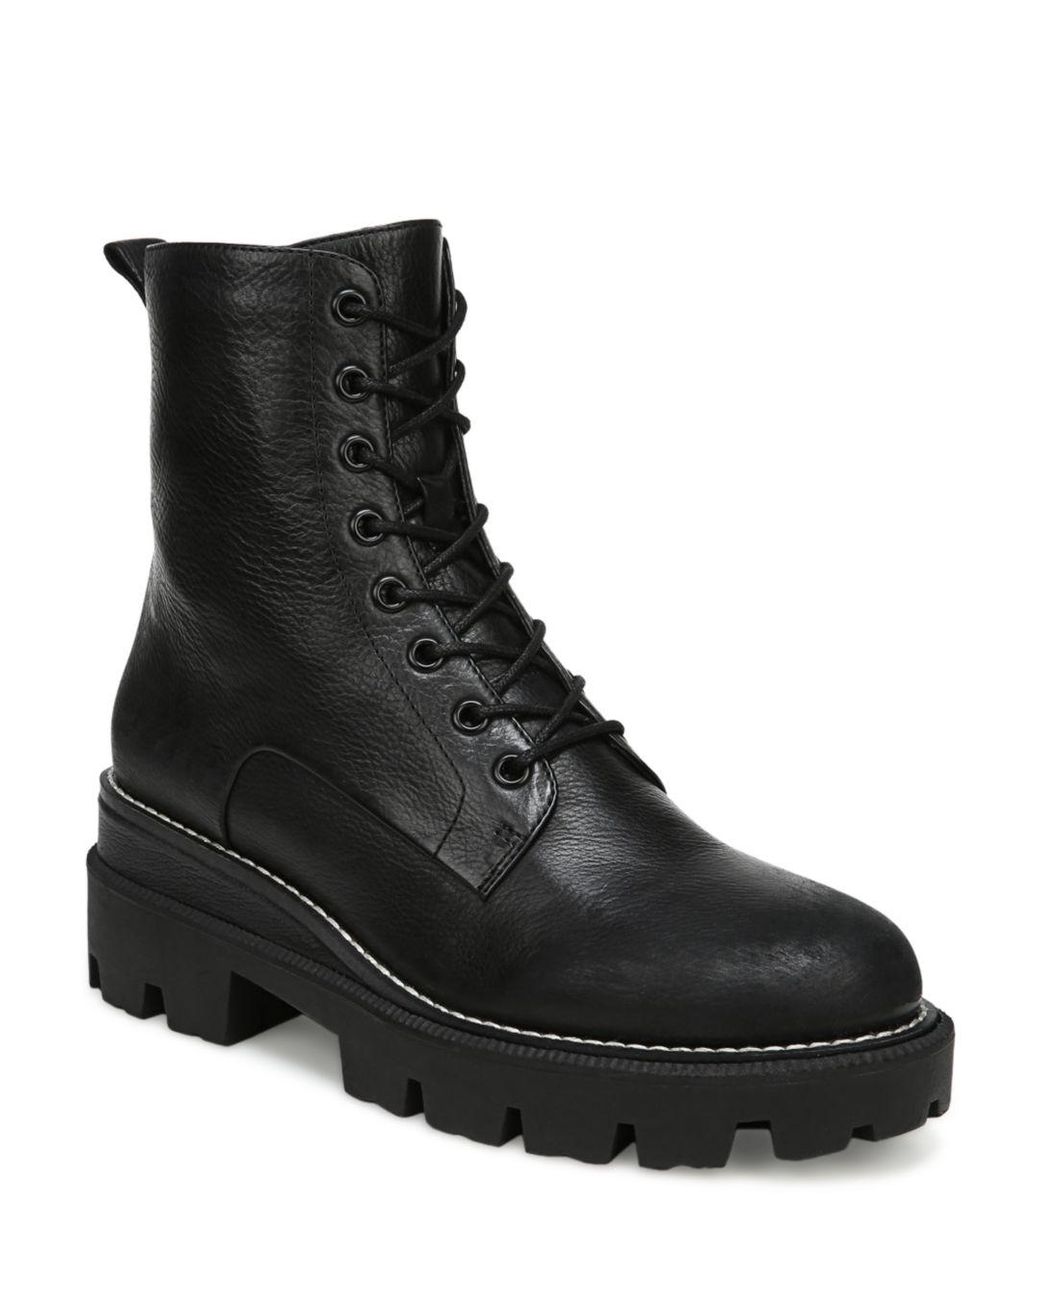 Sam Edelman Leather Garret Combat Platform Boots in Black - Lyst